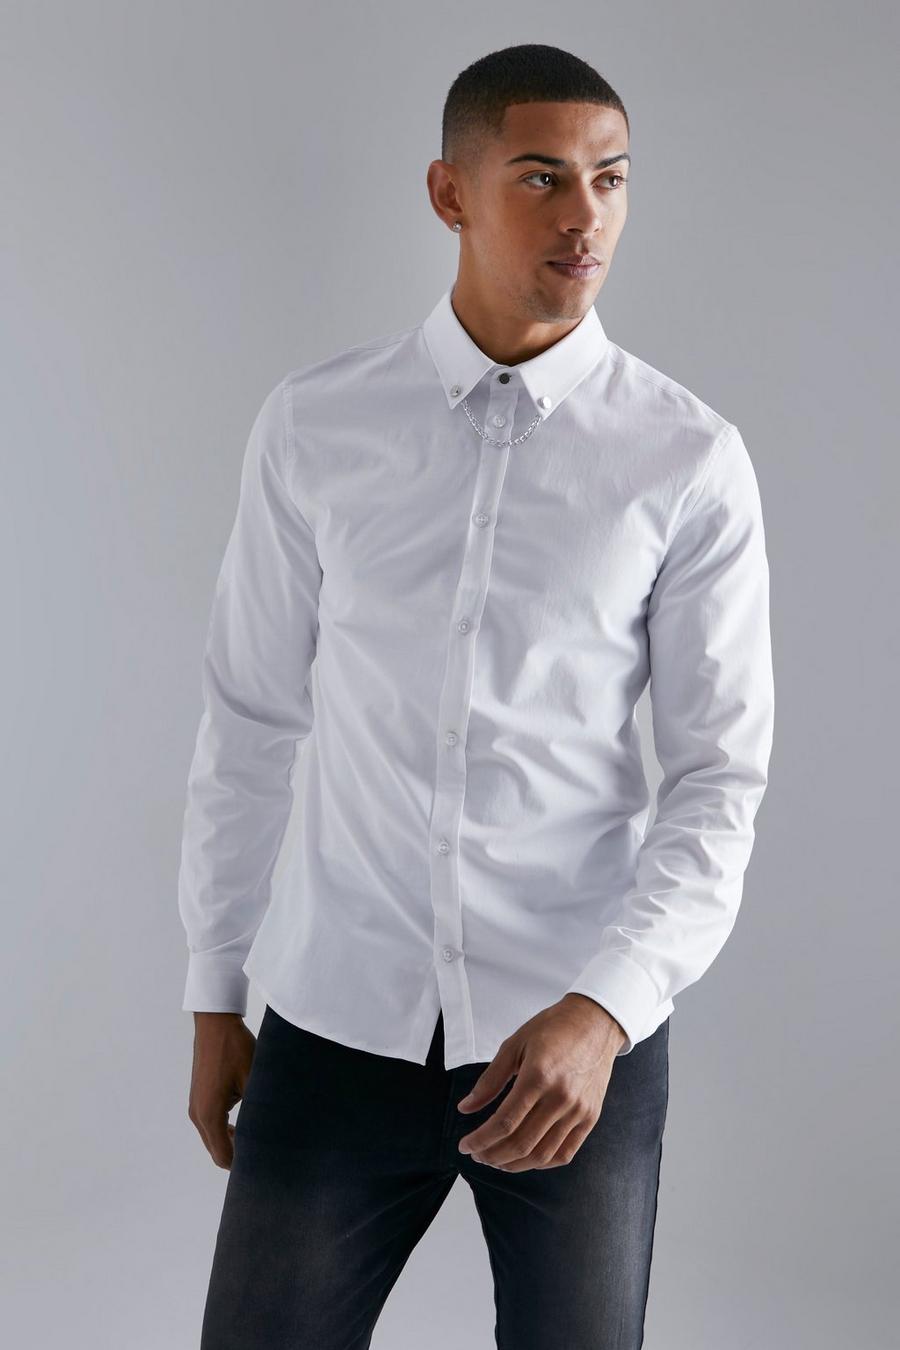 https://media.boohoo.com/i/boohoo/bmm31365_white_xl/male-white-long-sleeve-slim-chain-collar-shirt/?w=900&qlt=default&fmt.jp2.qlt=70&fmt=auto&sm=fit